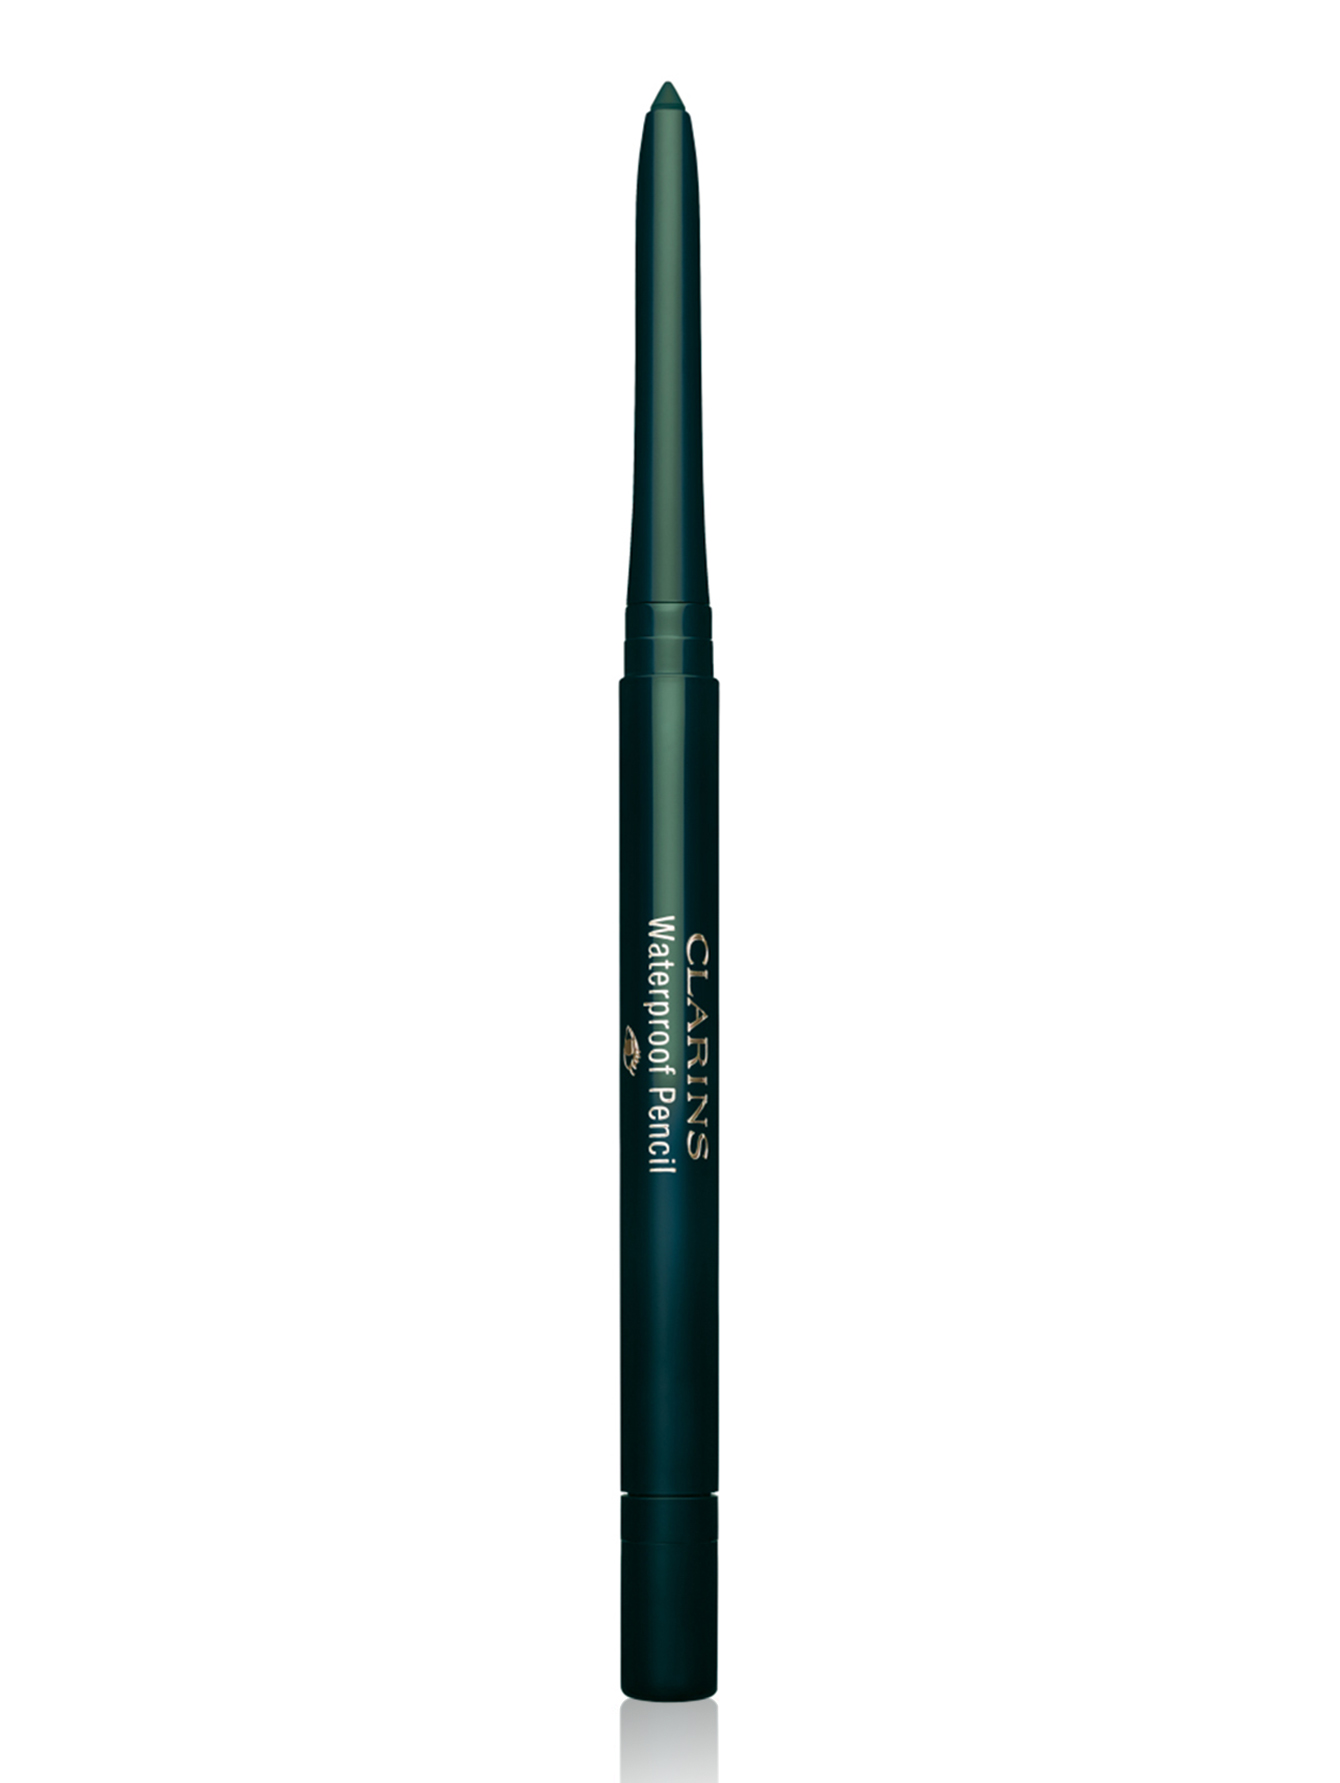 Карандаш для глаз Waterproof Pencil 05 Makeup - Общий вид